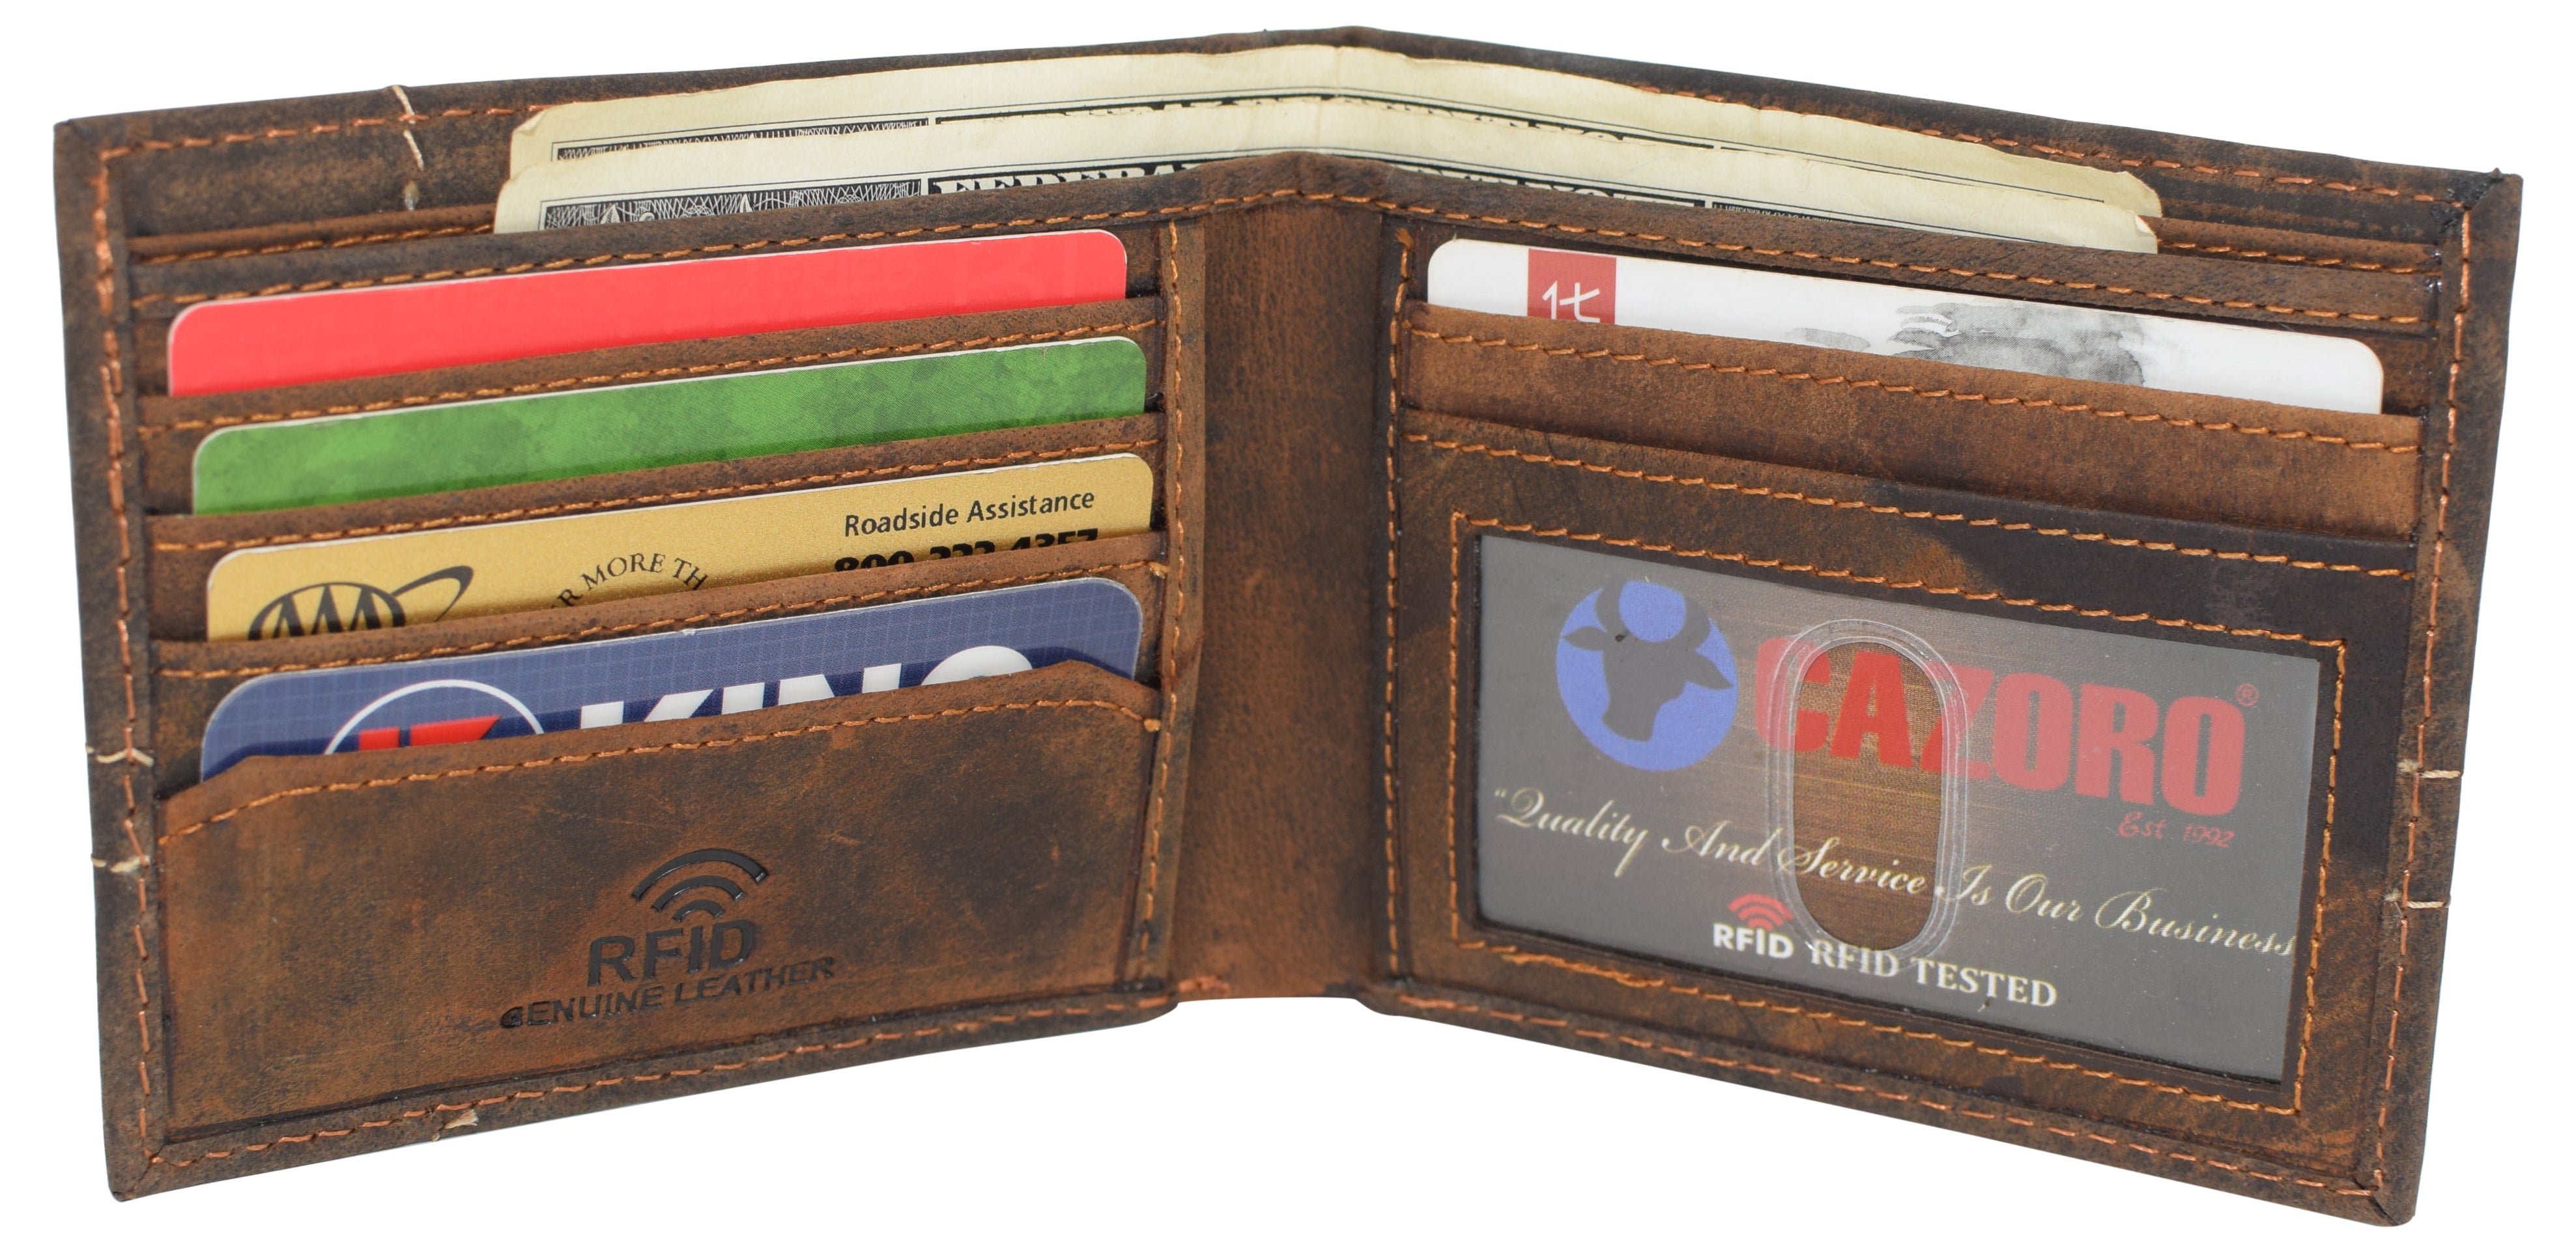 Classic men's Italian leather bifold wallet